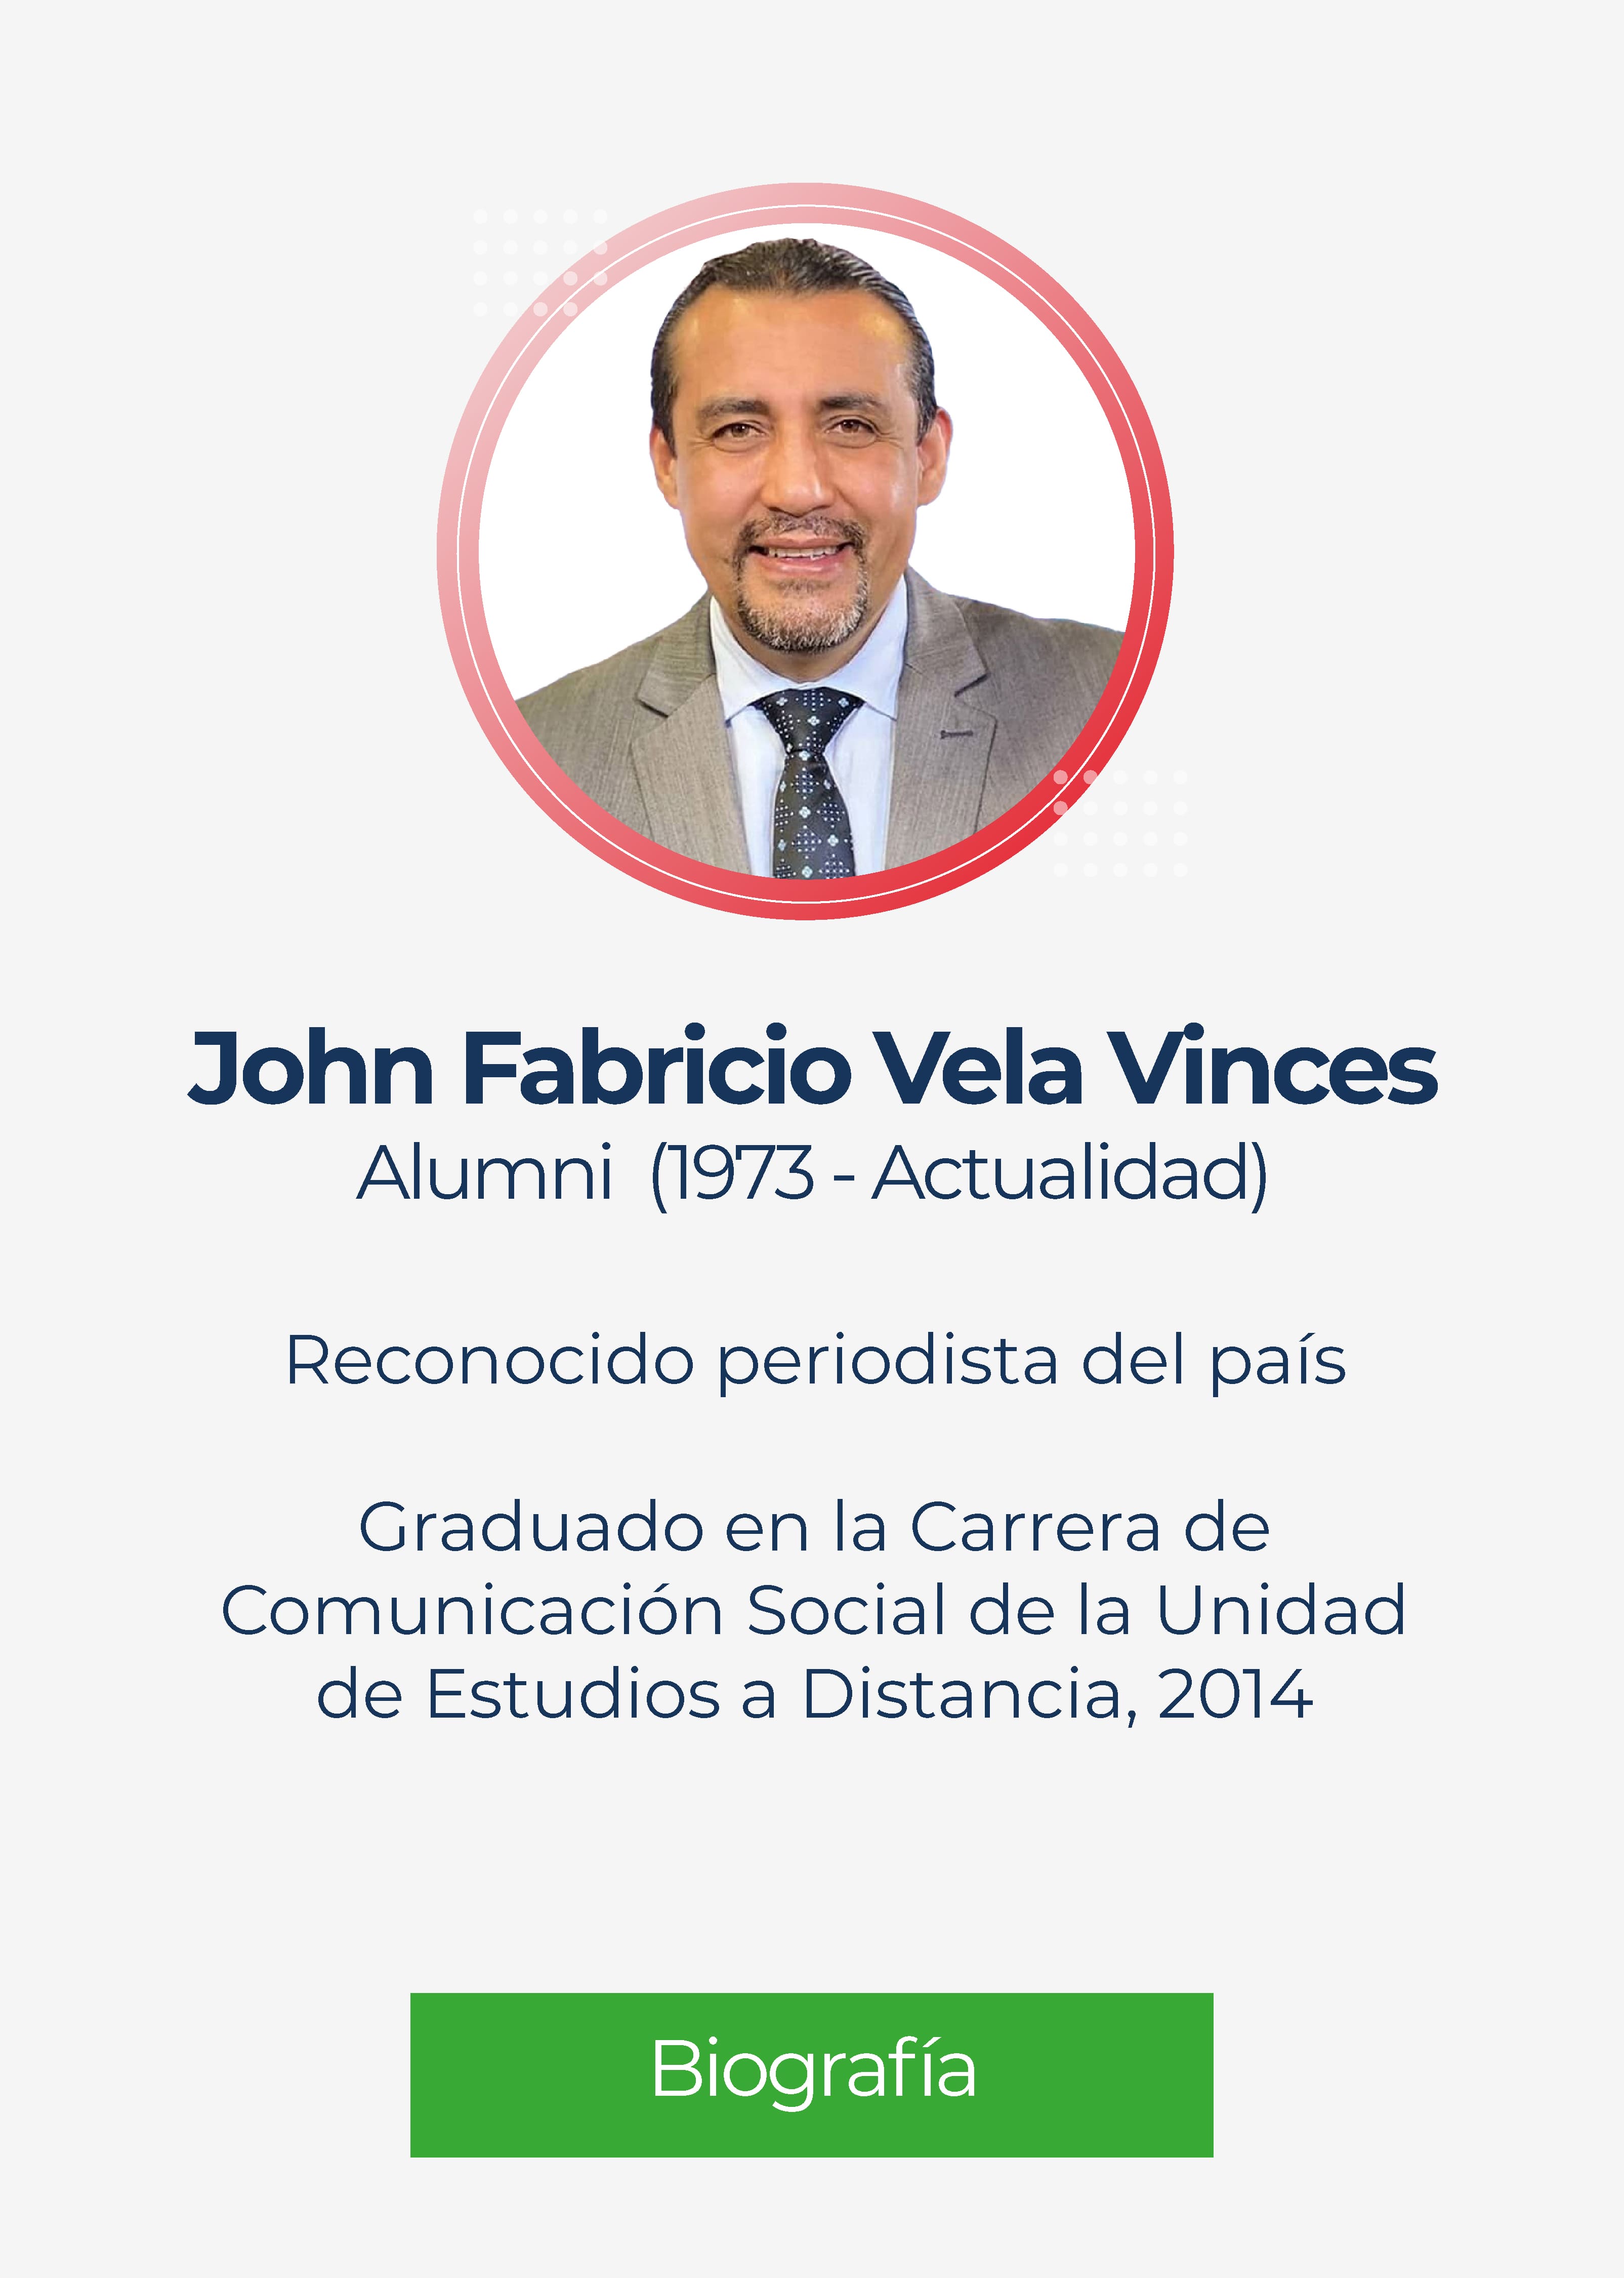 John Fabricio Vela Vinces 